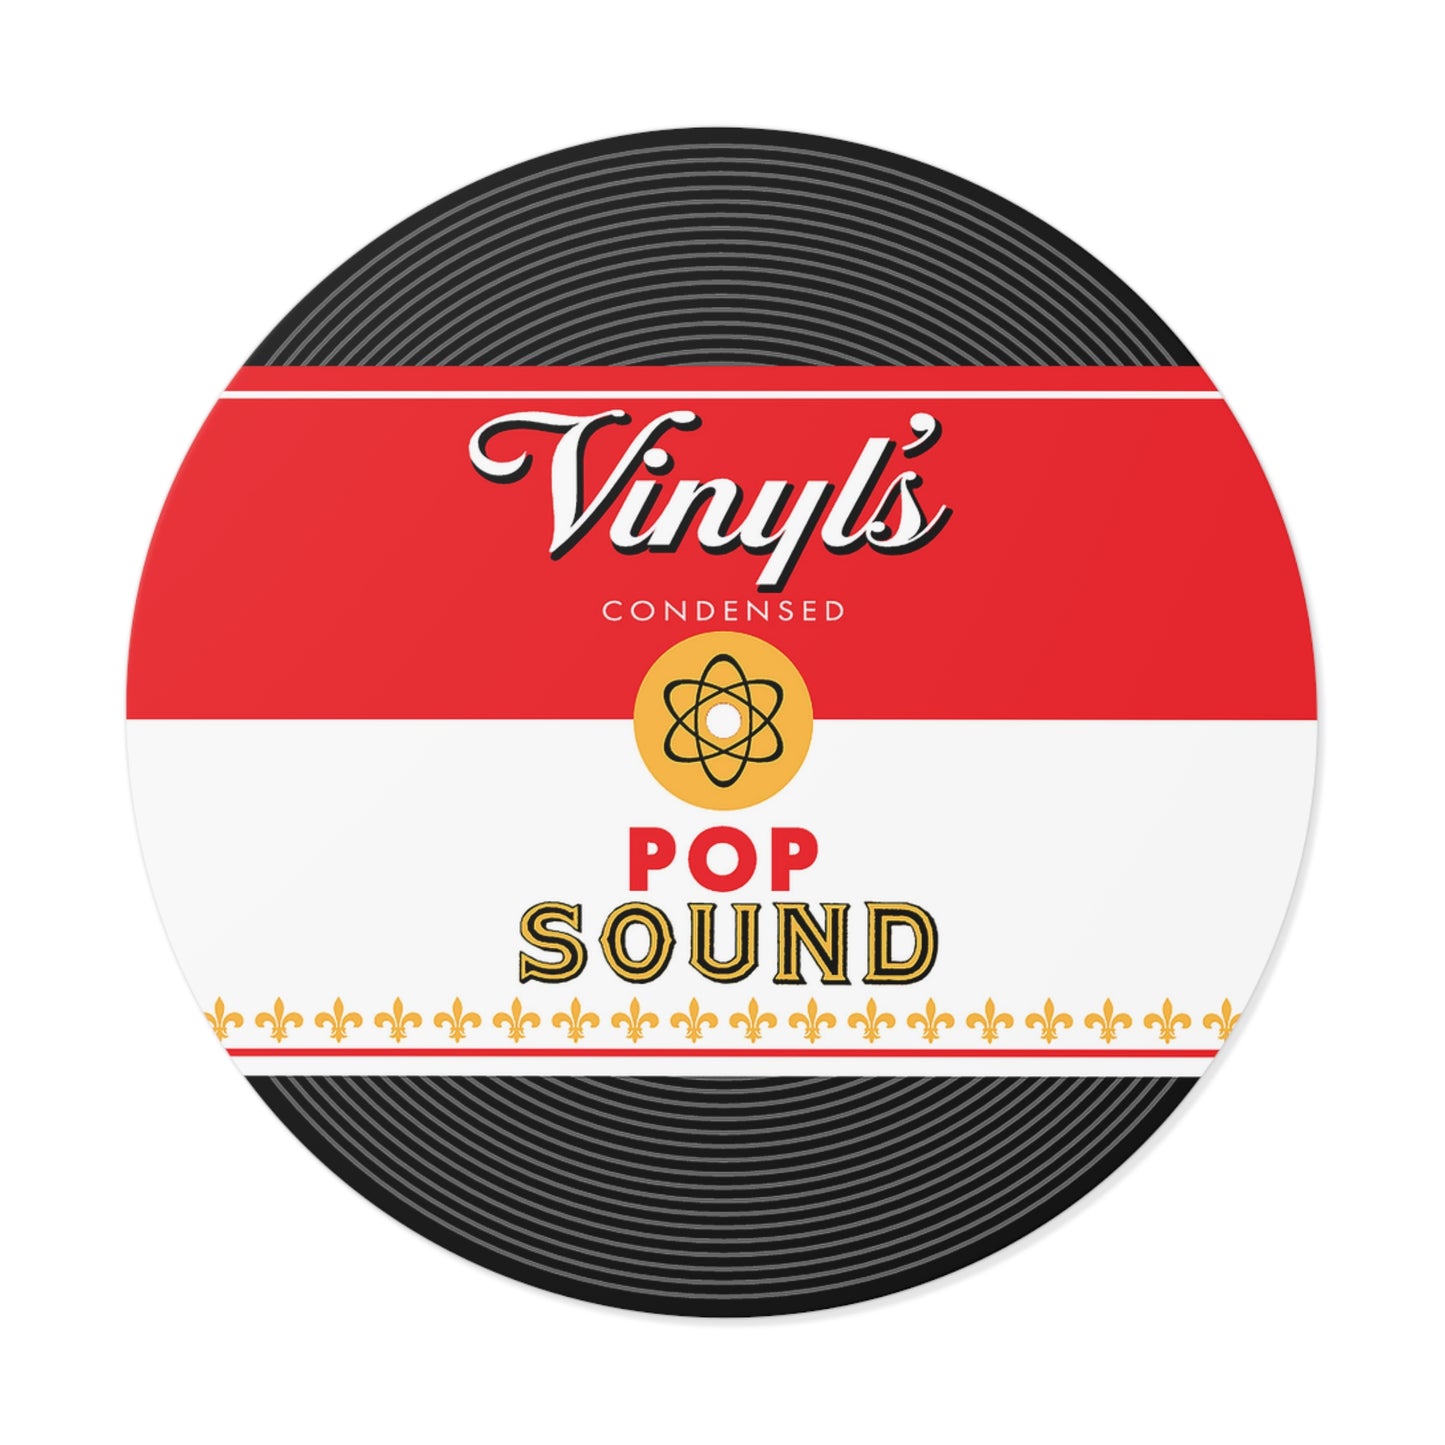 Vinyl Record Themed Round Vinyl Stickers - Vinyl Condensed - 5 sizes available